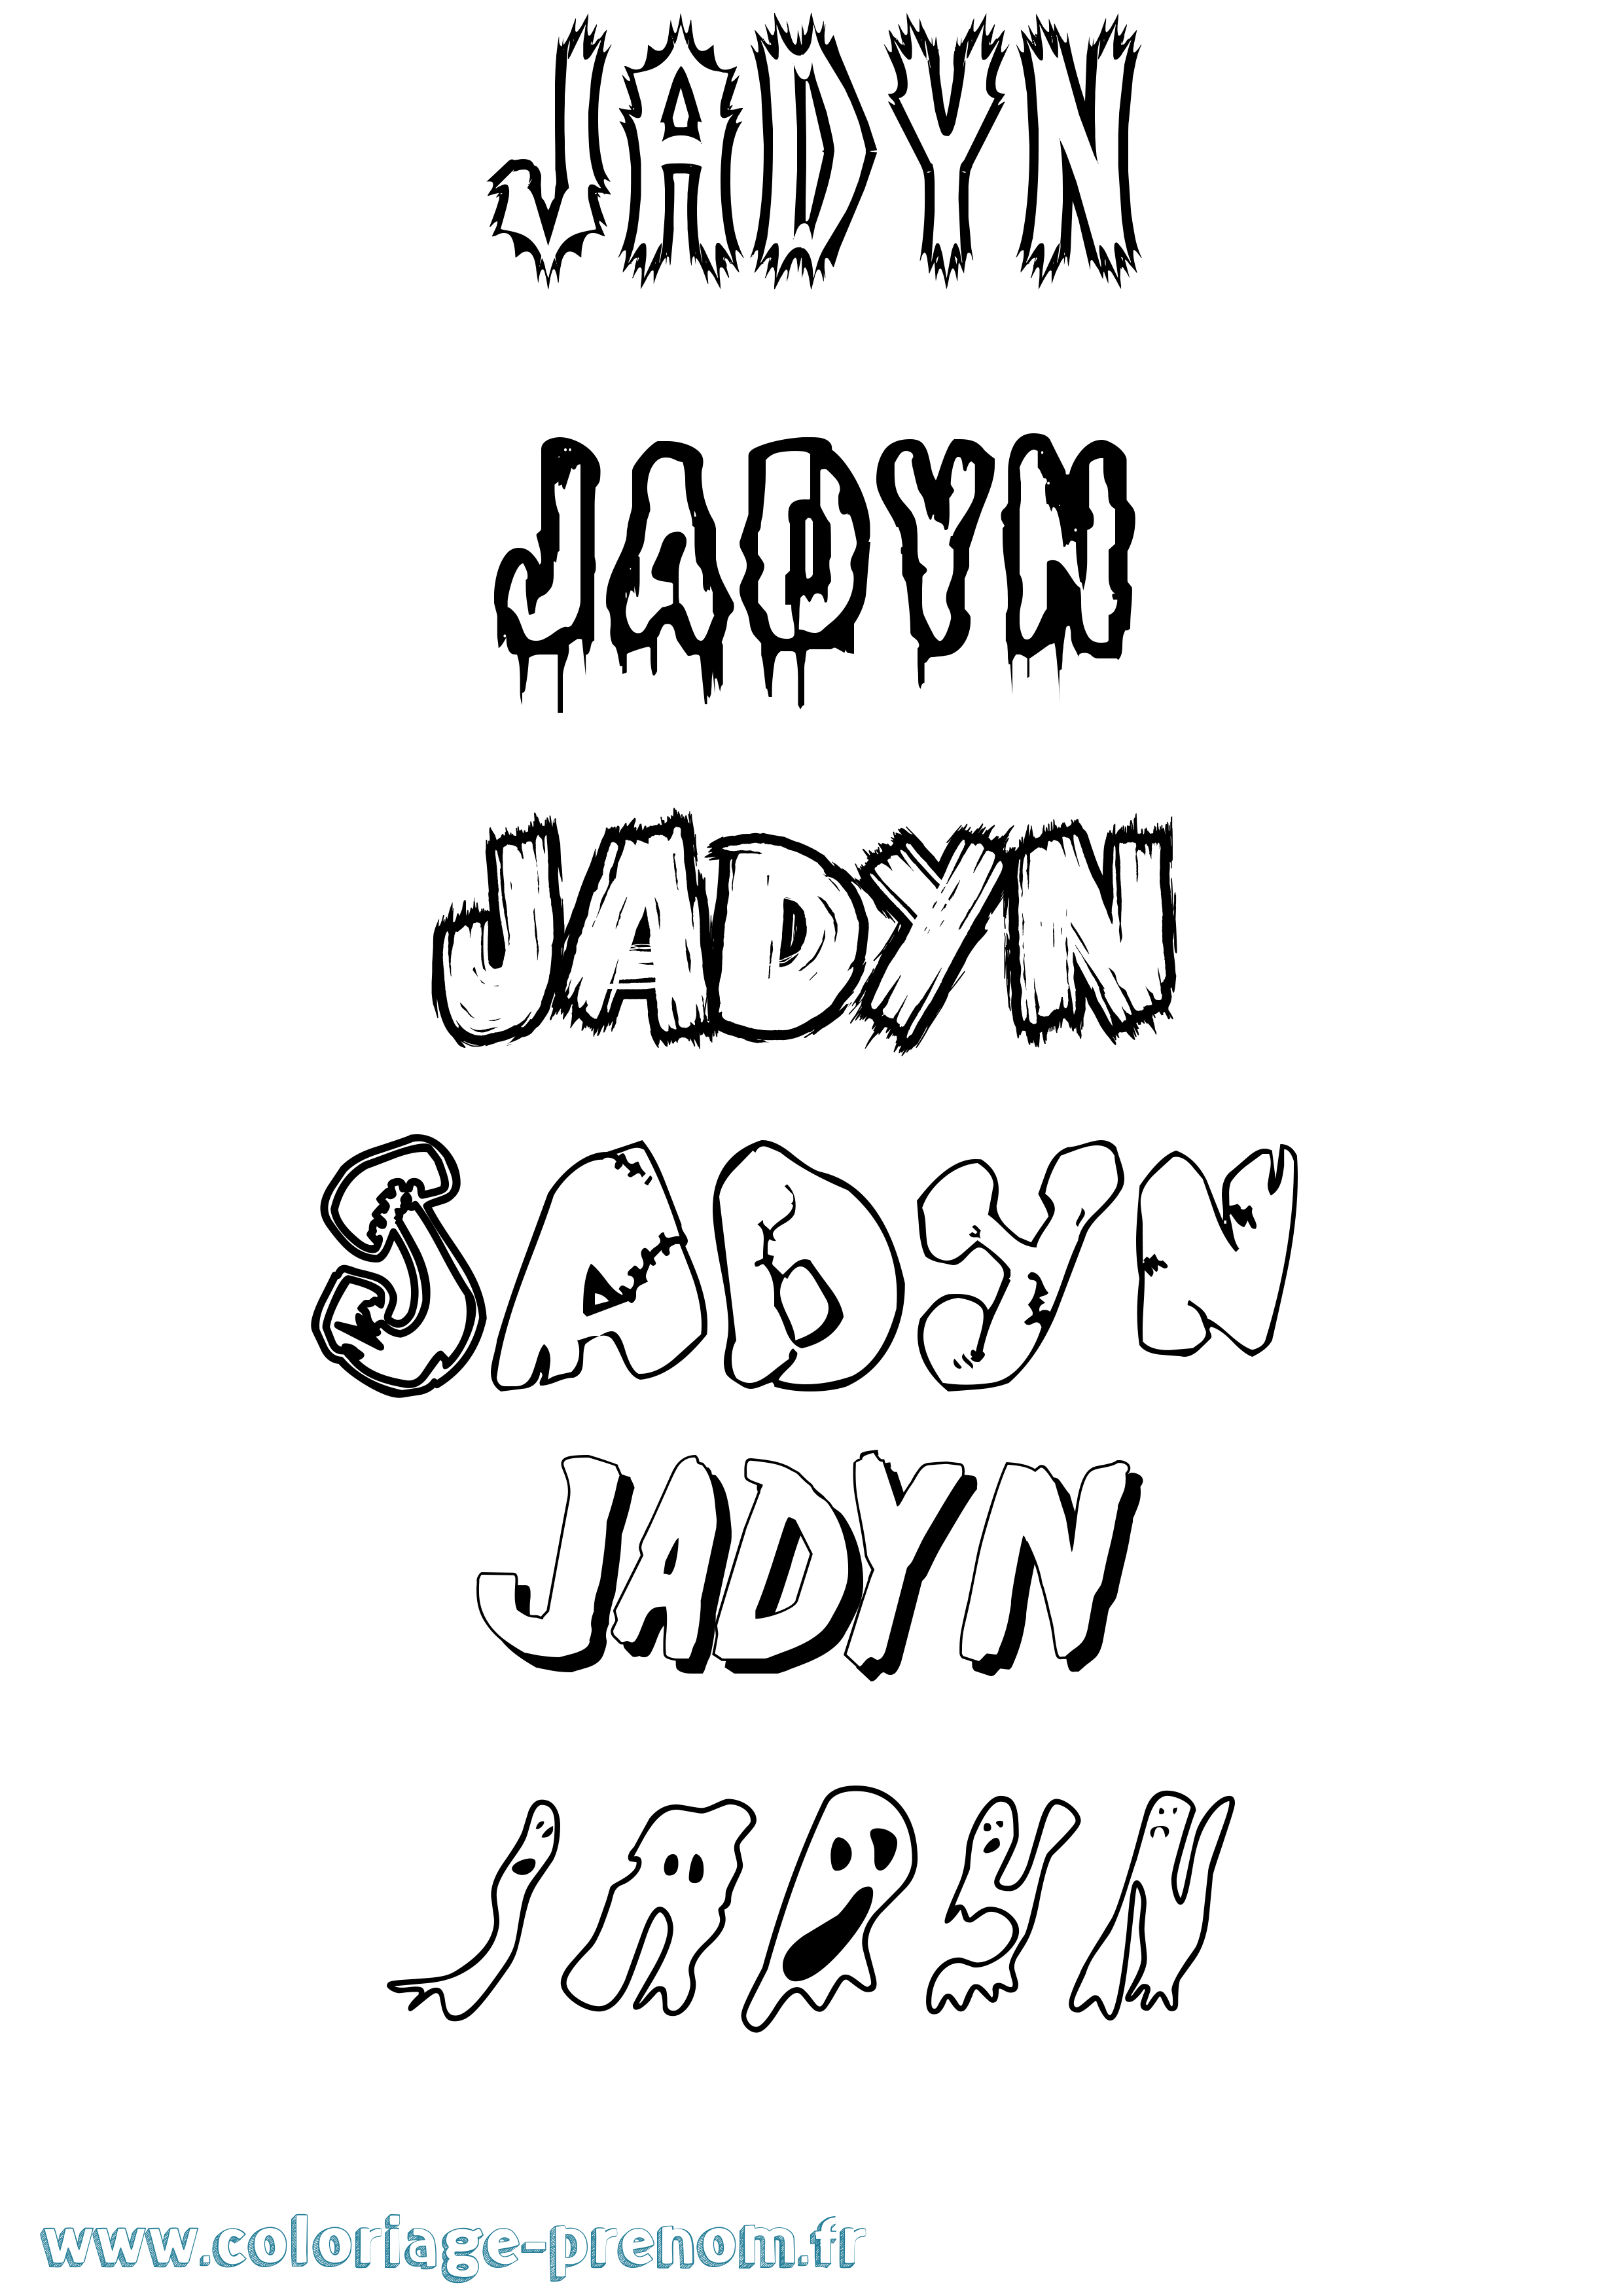 Coloriage prénom Jadyn Frisson